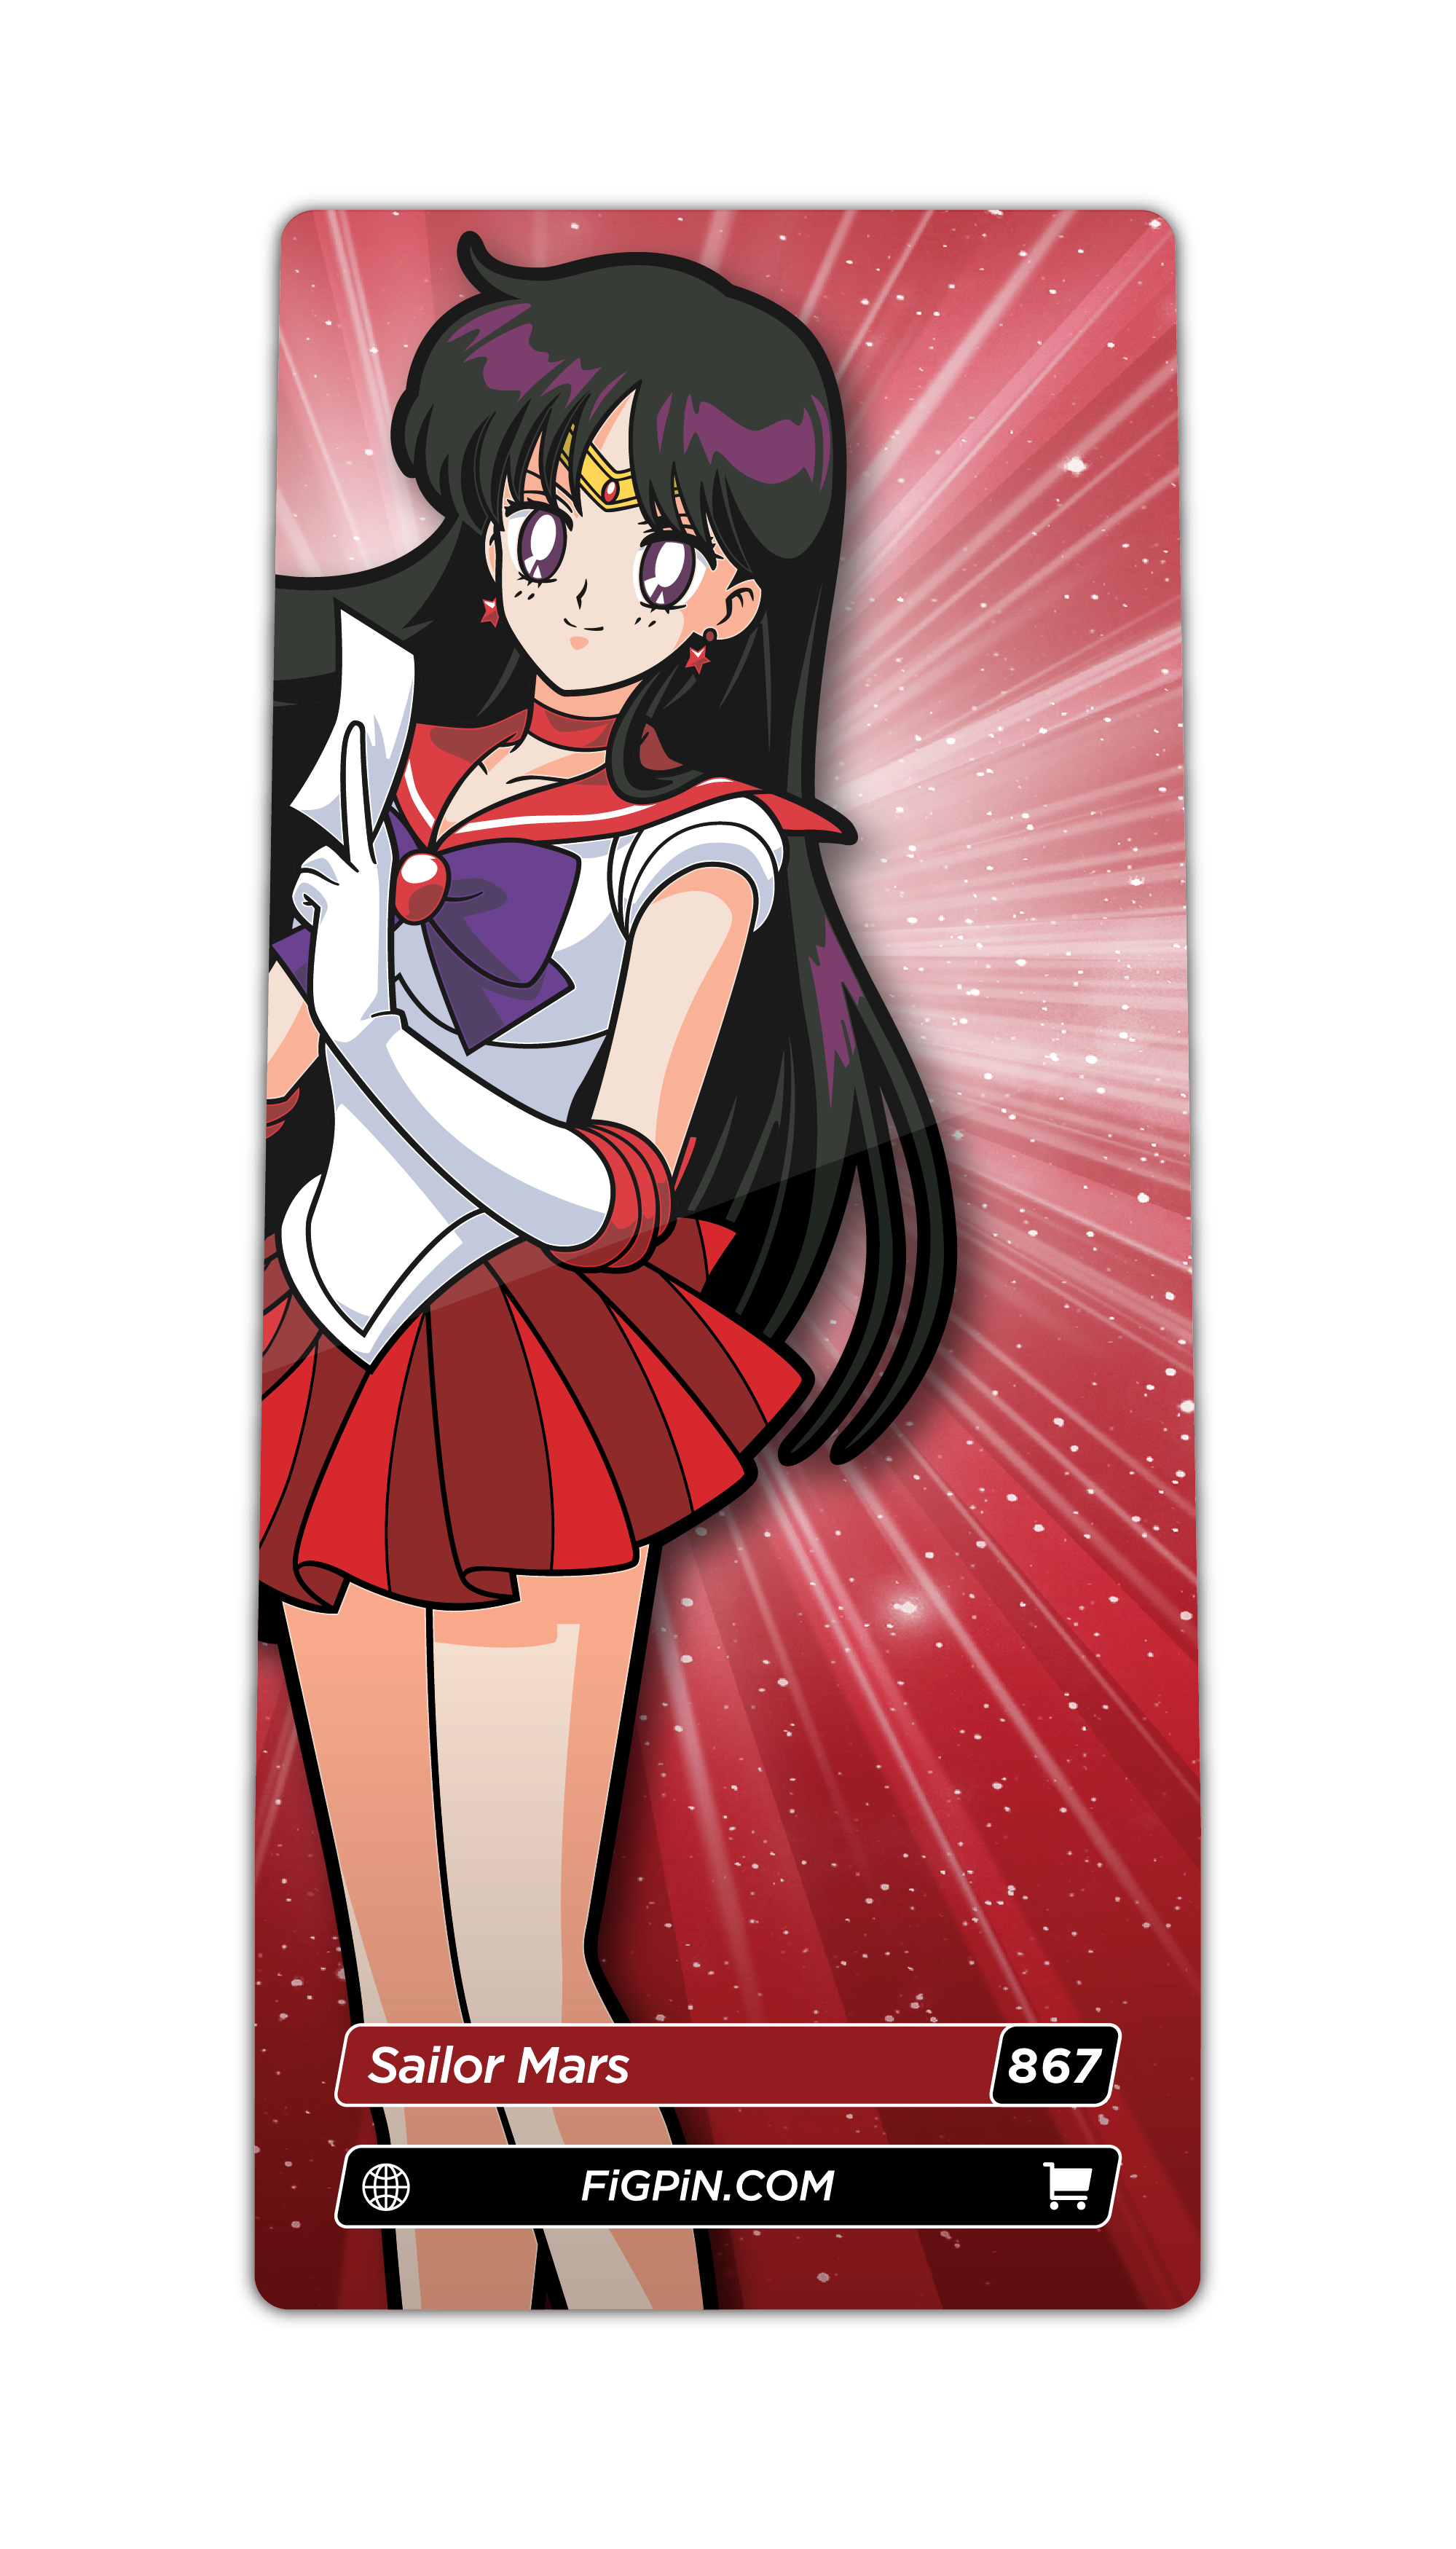 Sailor Mars (867)